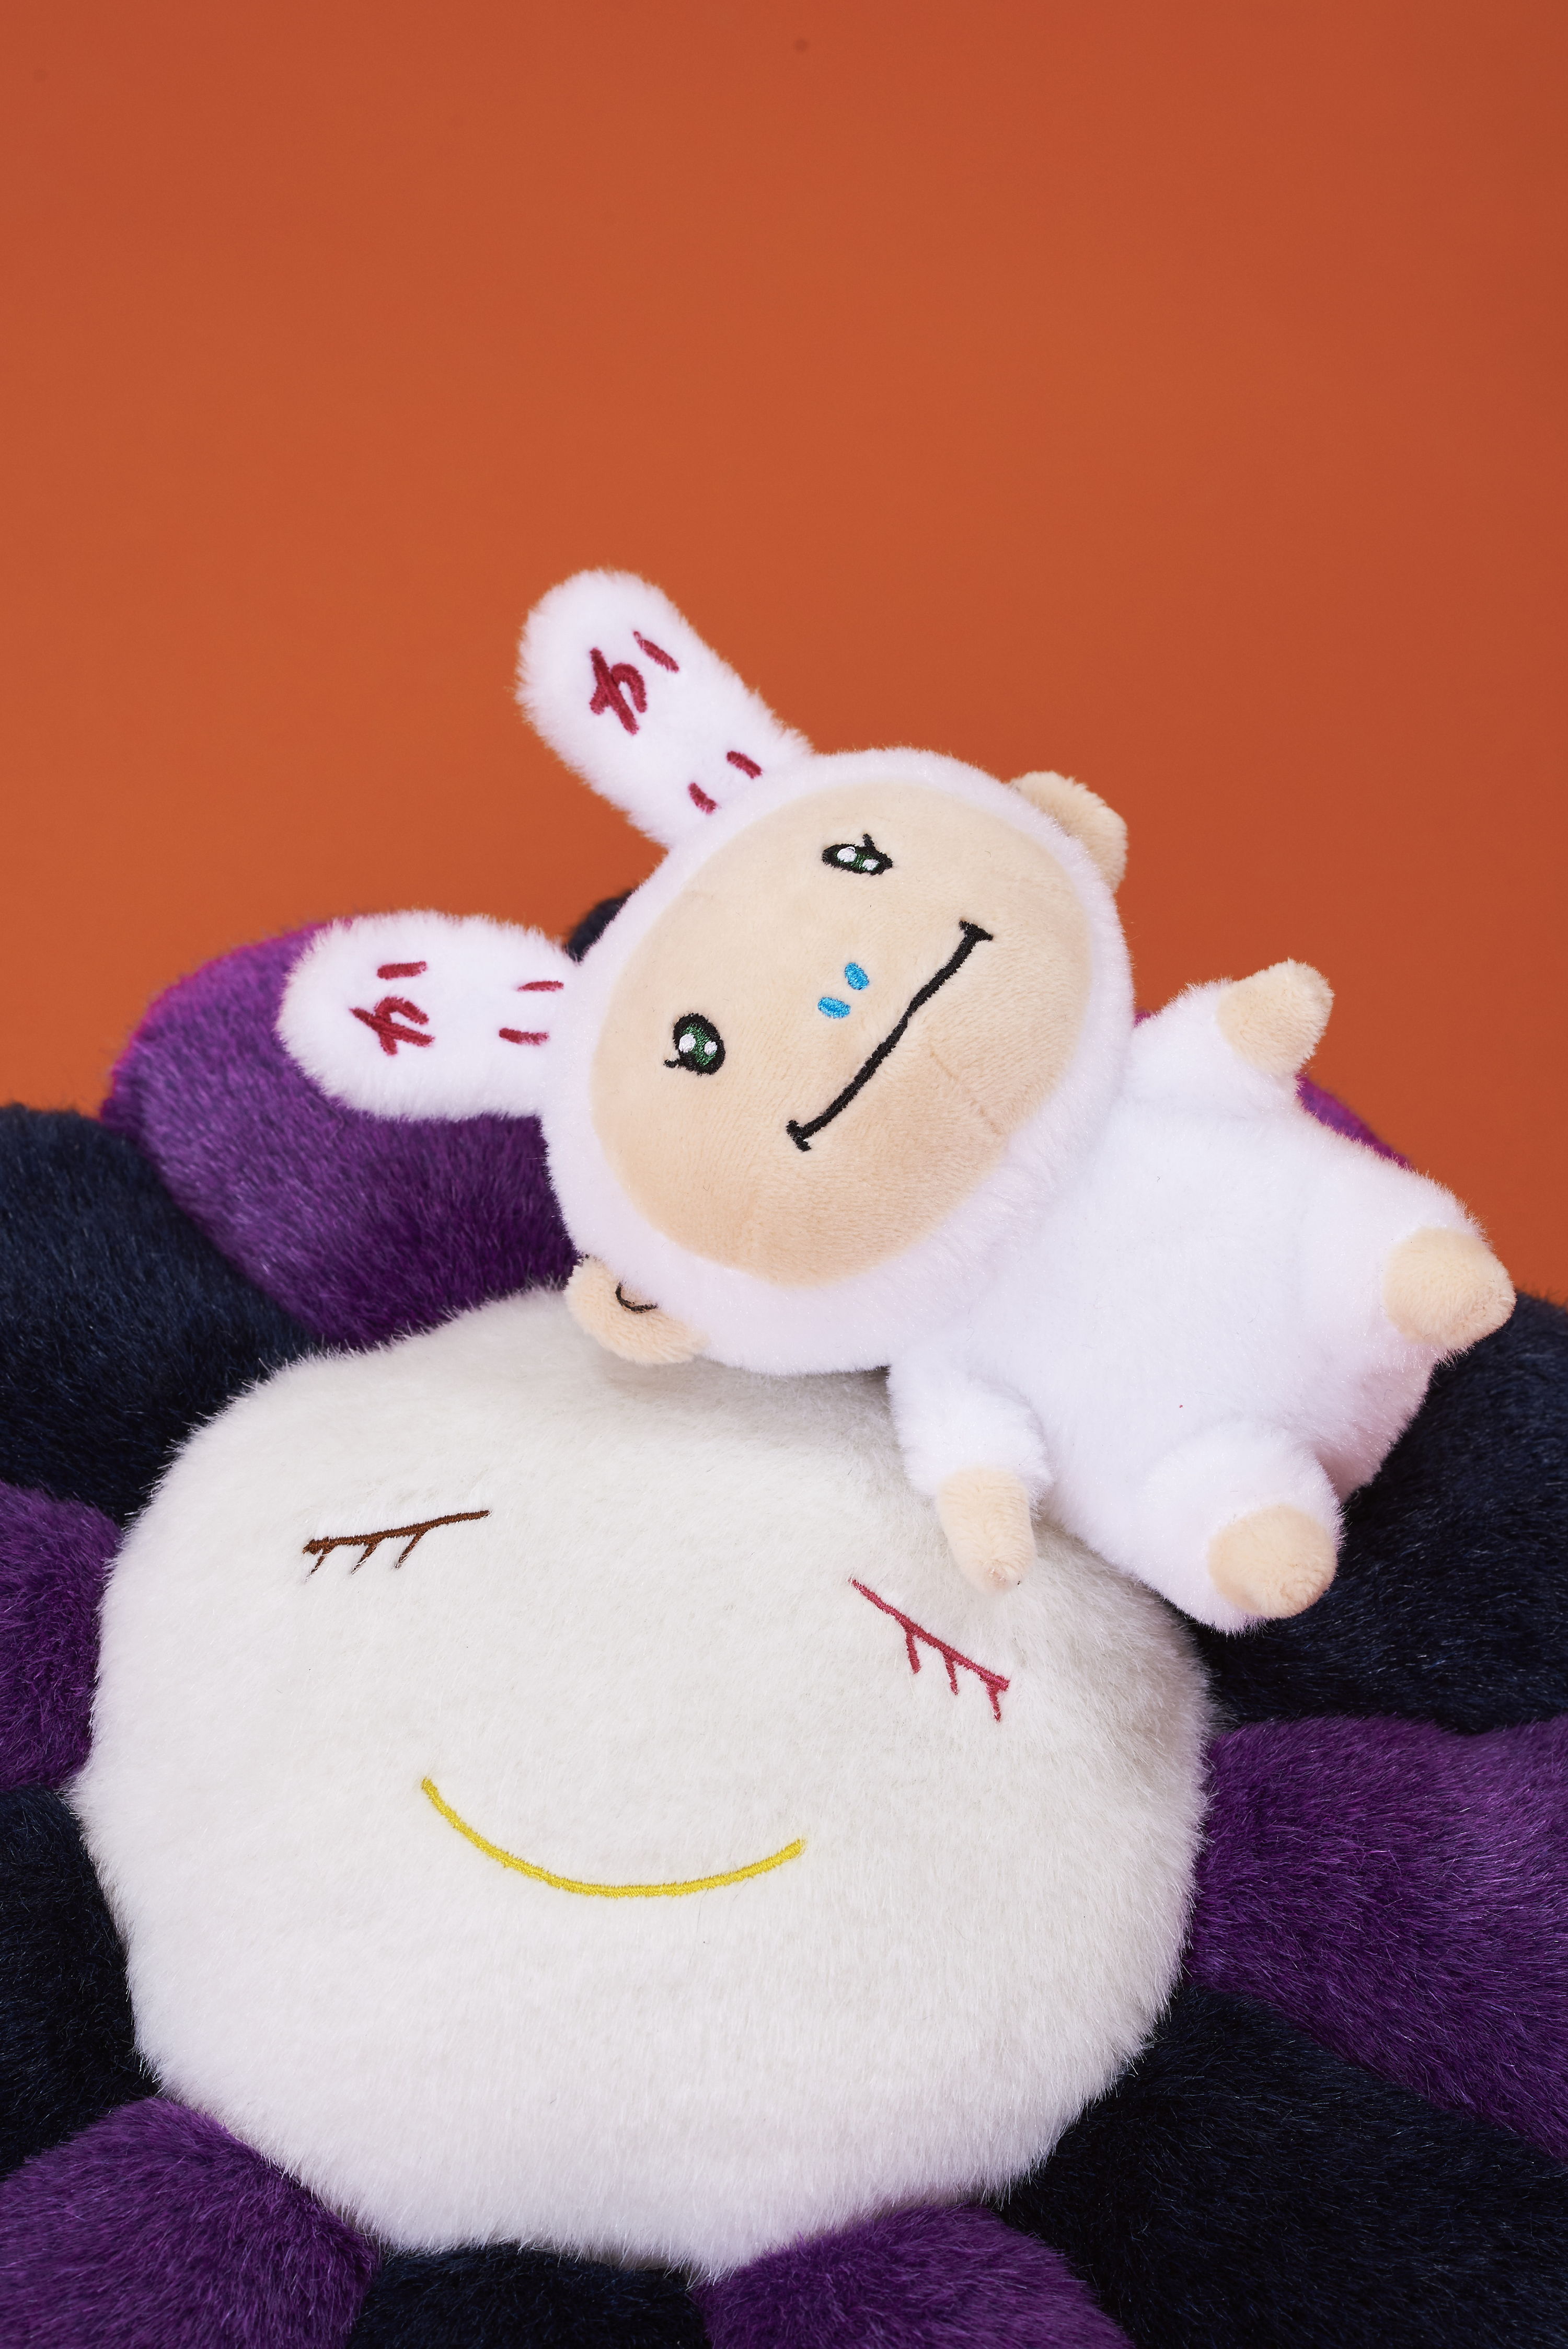 plush toys by takashi murakami and hh lorenzo collaboration giftshop